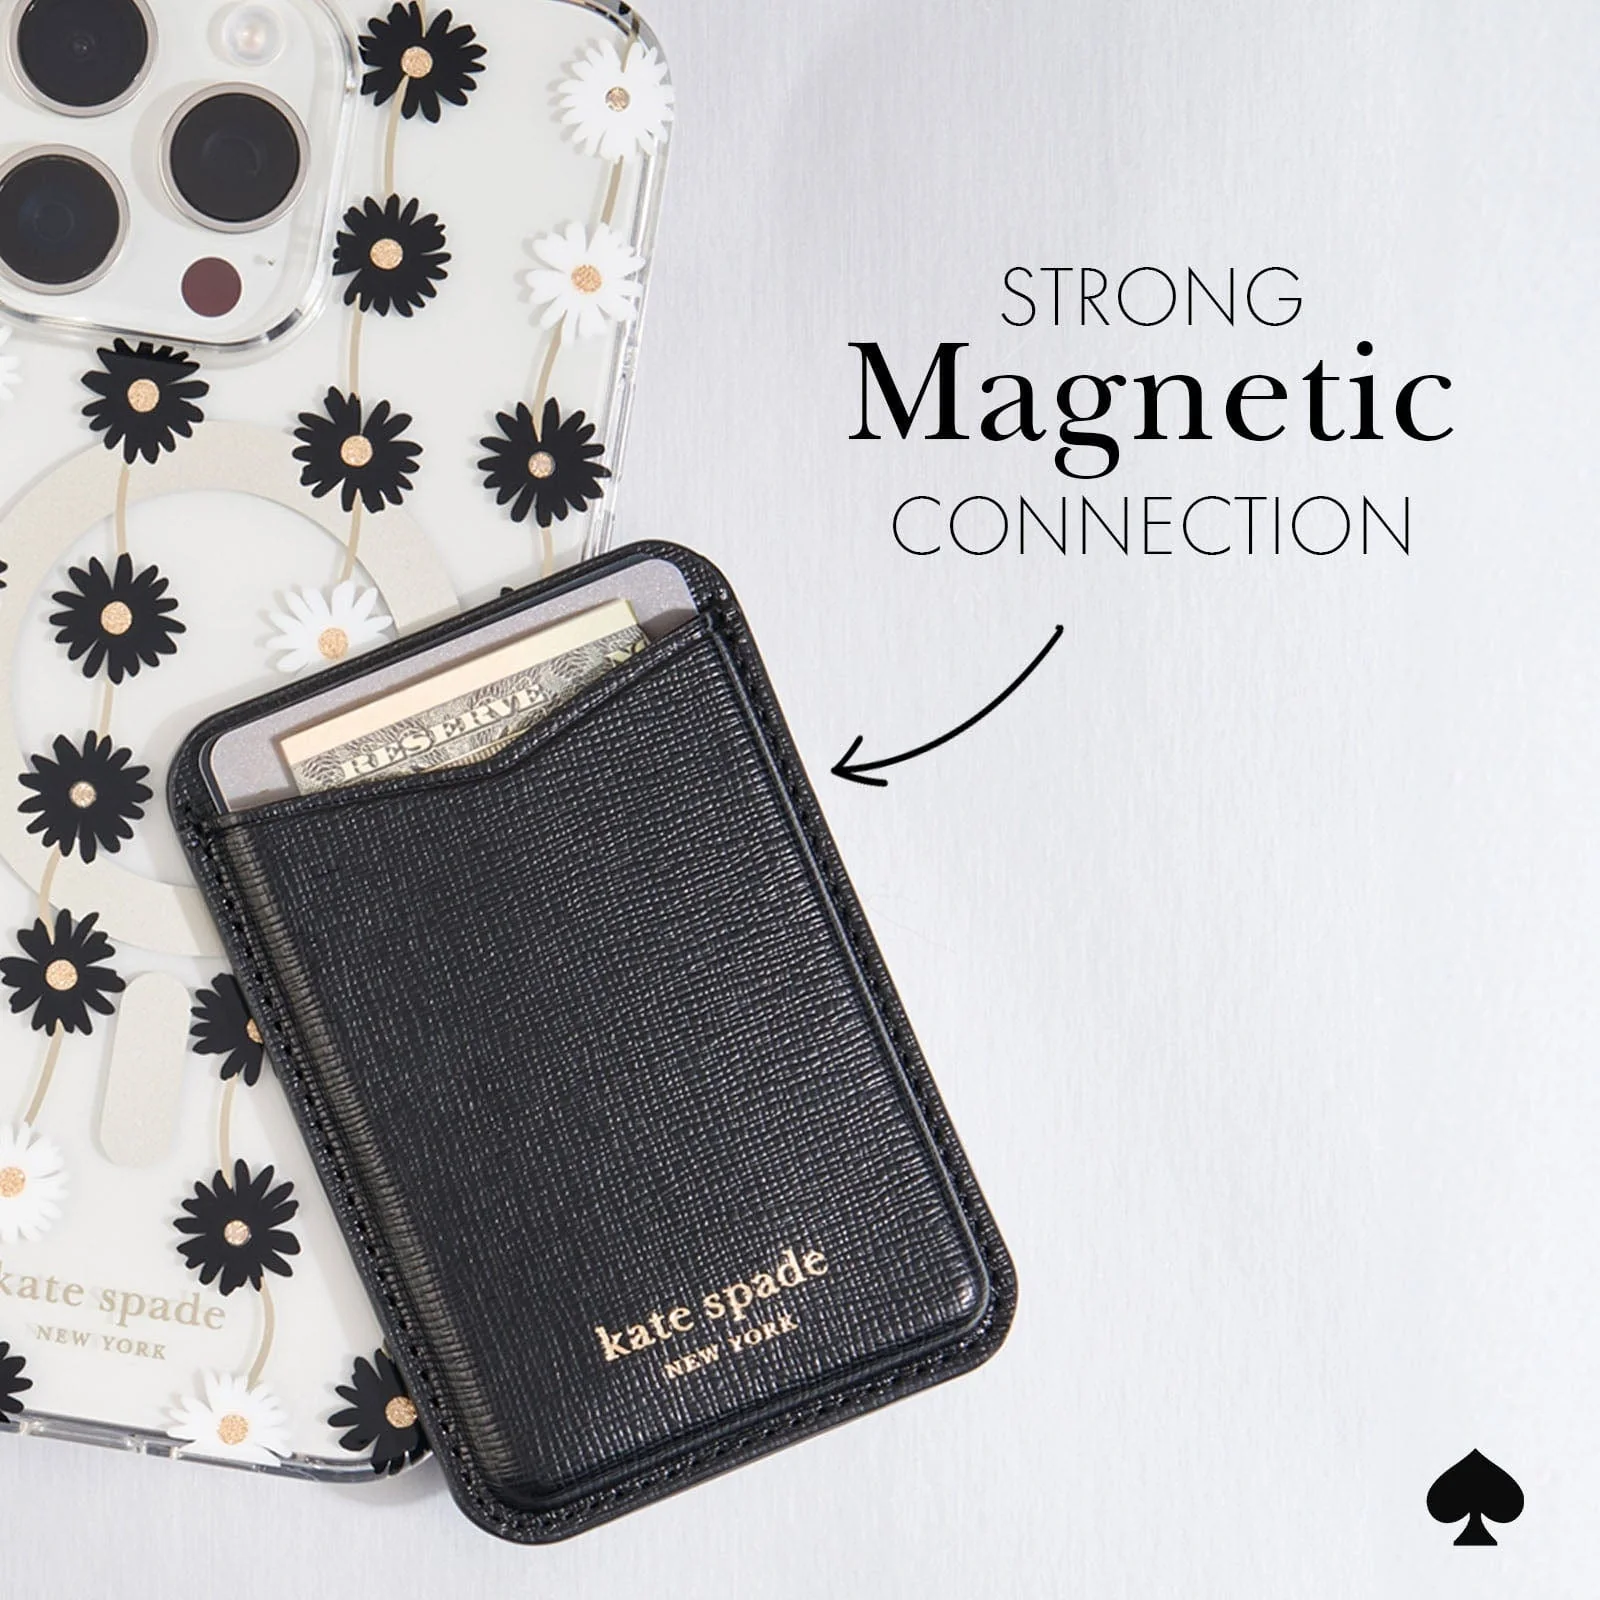 Kate Spade New York รุ่น Magnetic Card Holder - ที่เก็บบัตรติดหลังมือถือ - ลาย Black